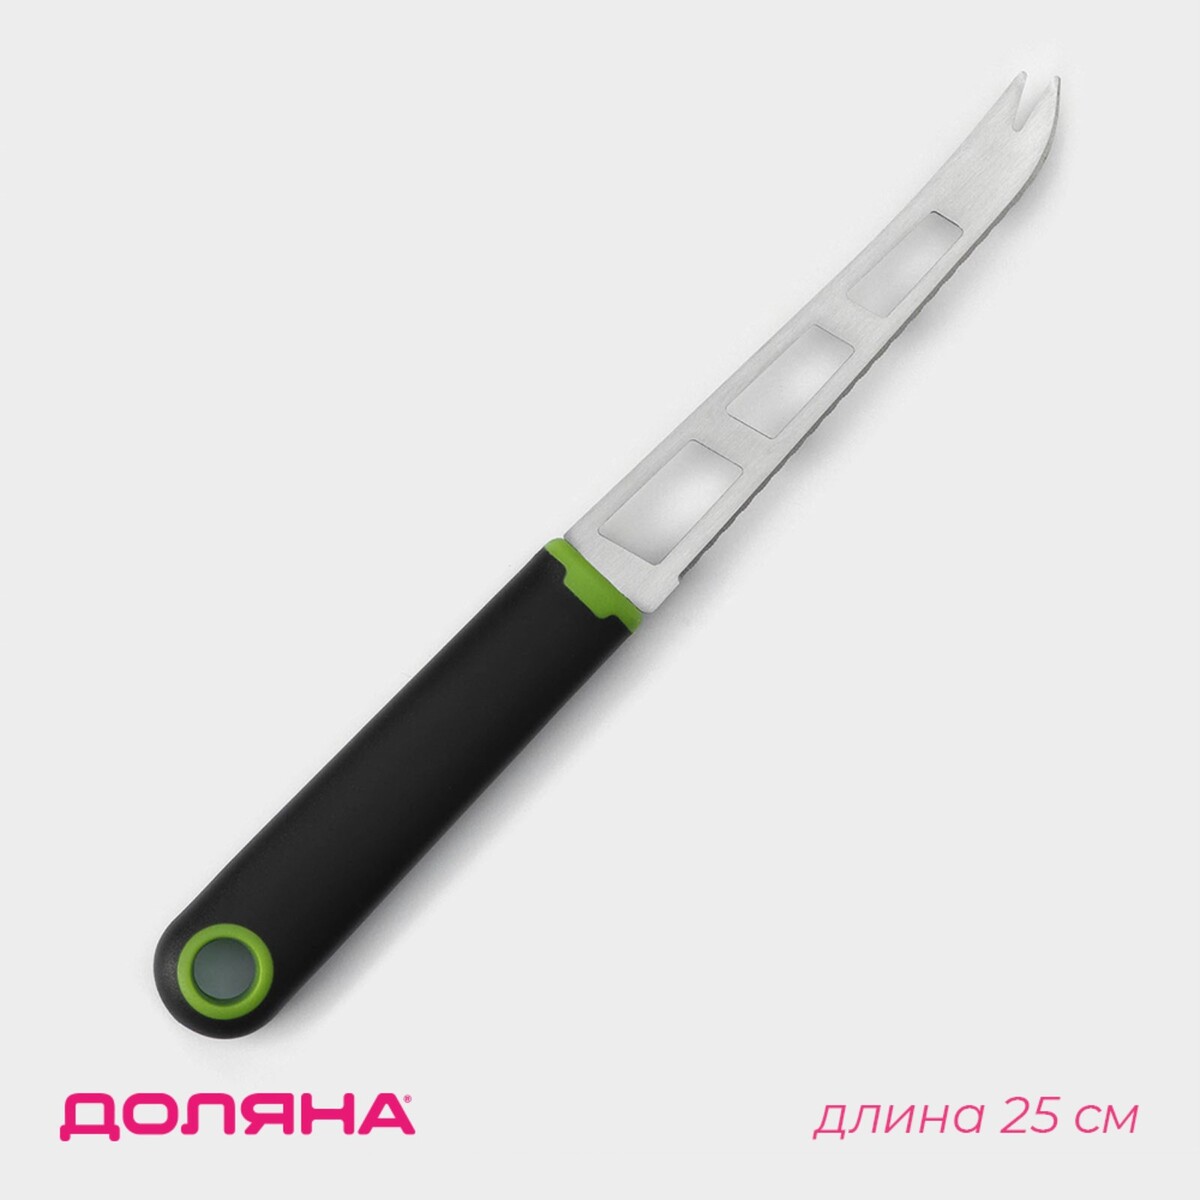 Нож для сыра доляна lime, 25×2,3 см, цвет черно-зеленый нож консервный доляна lime 20×5 см черно зеленый